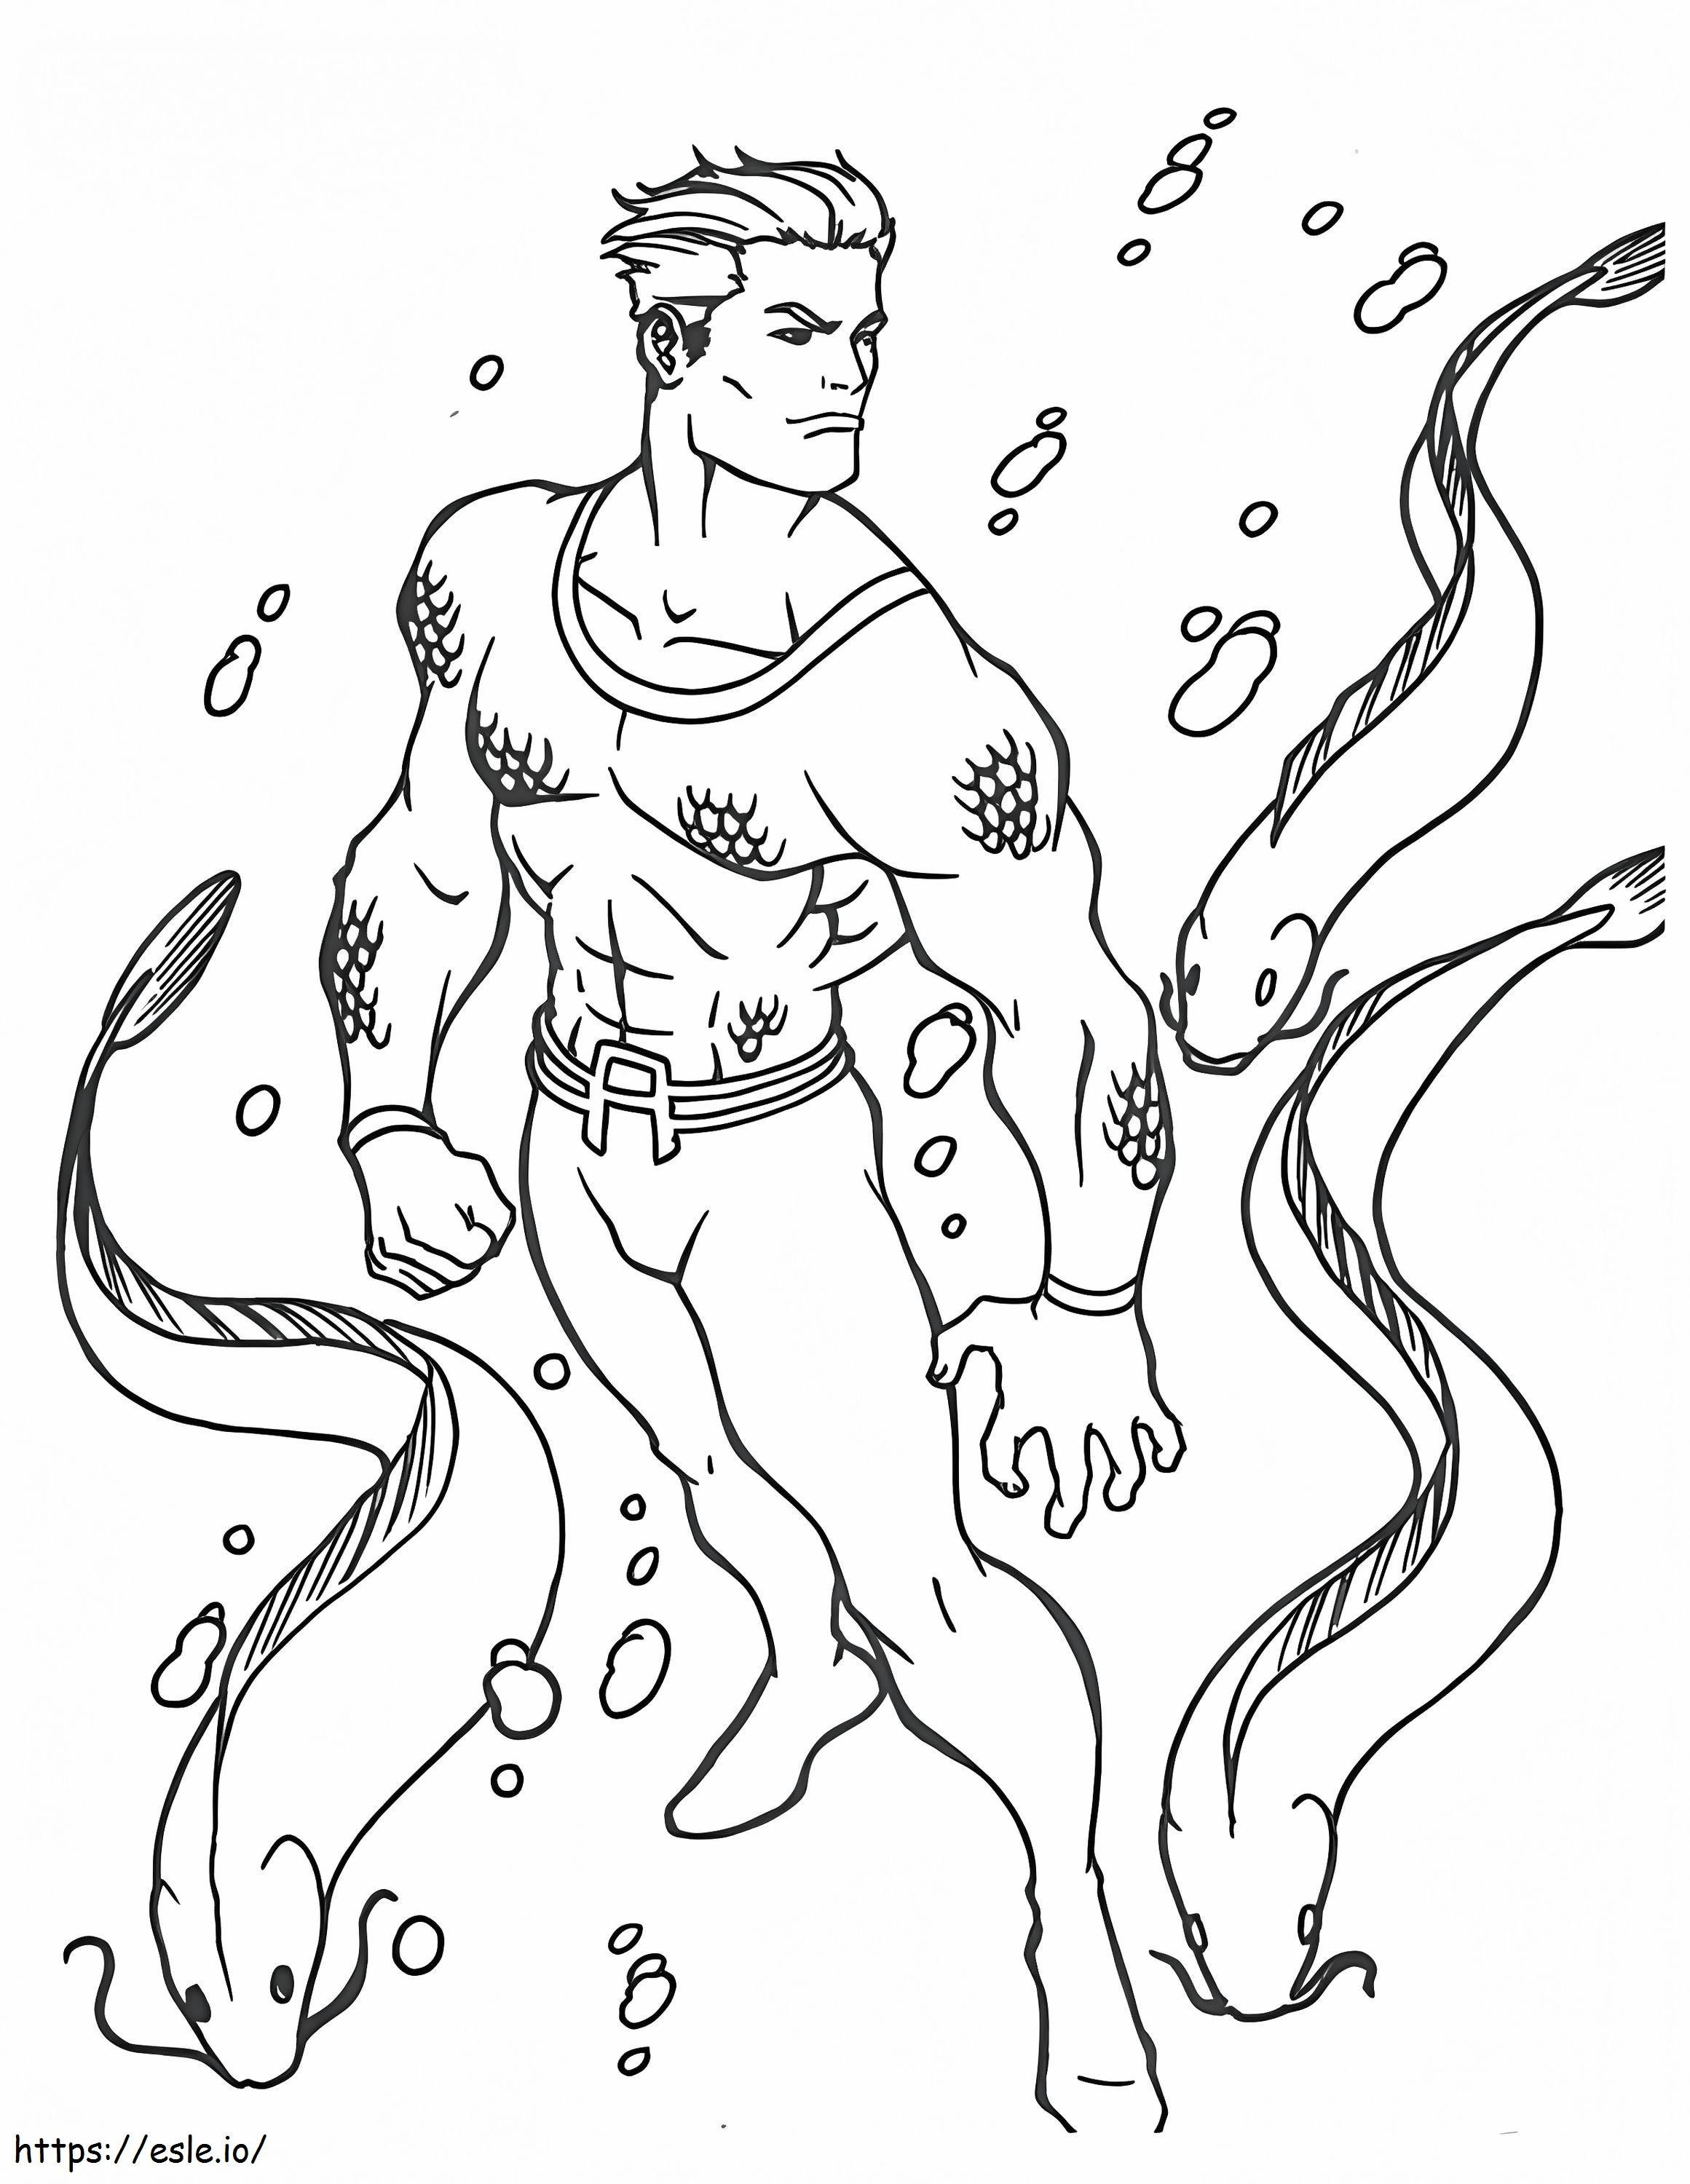 Aquaman 6 para colorir